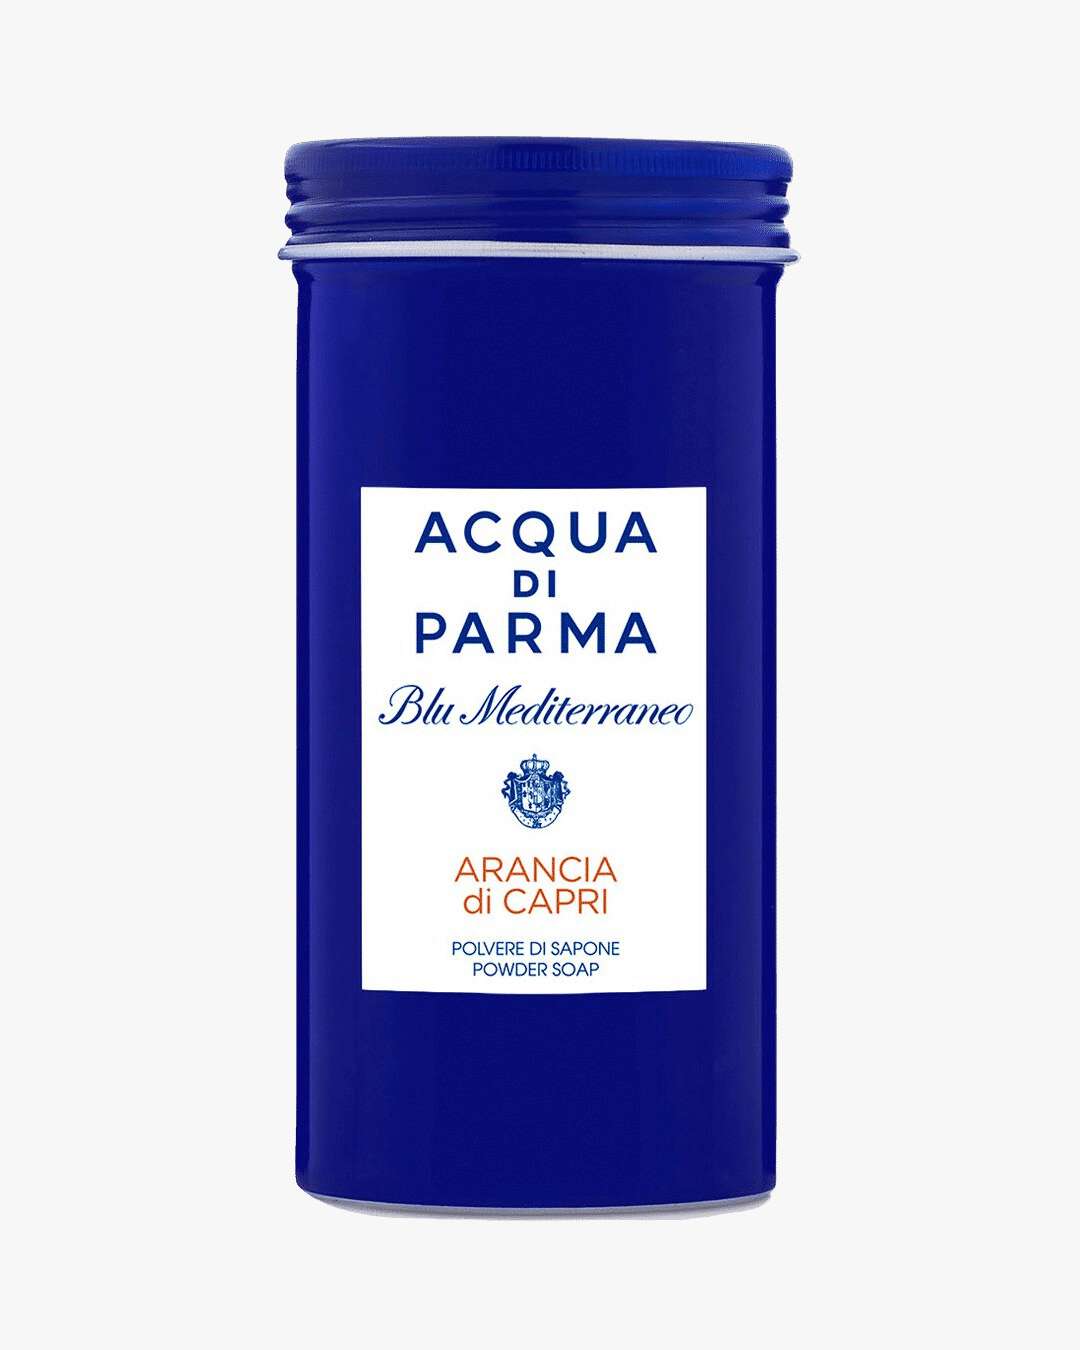 Blu Mediterrraneo Arancia di Capri Powder Soap 70g test